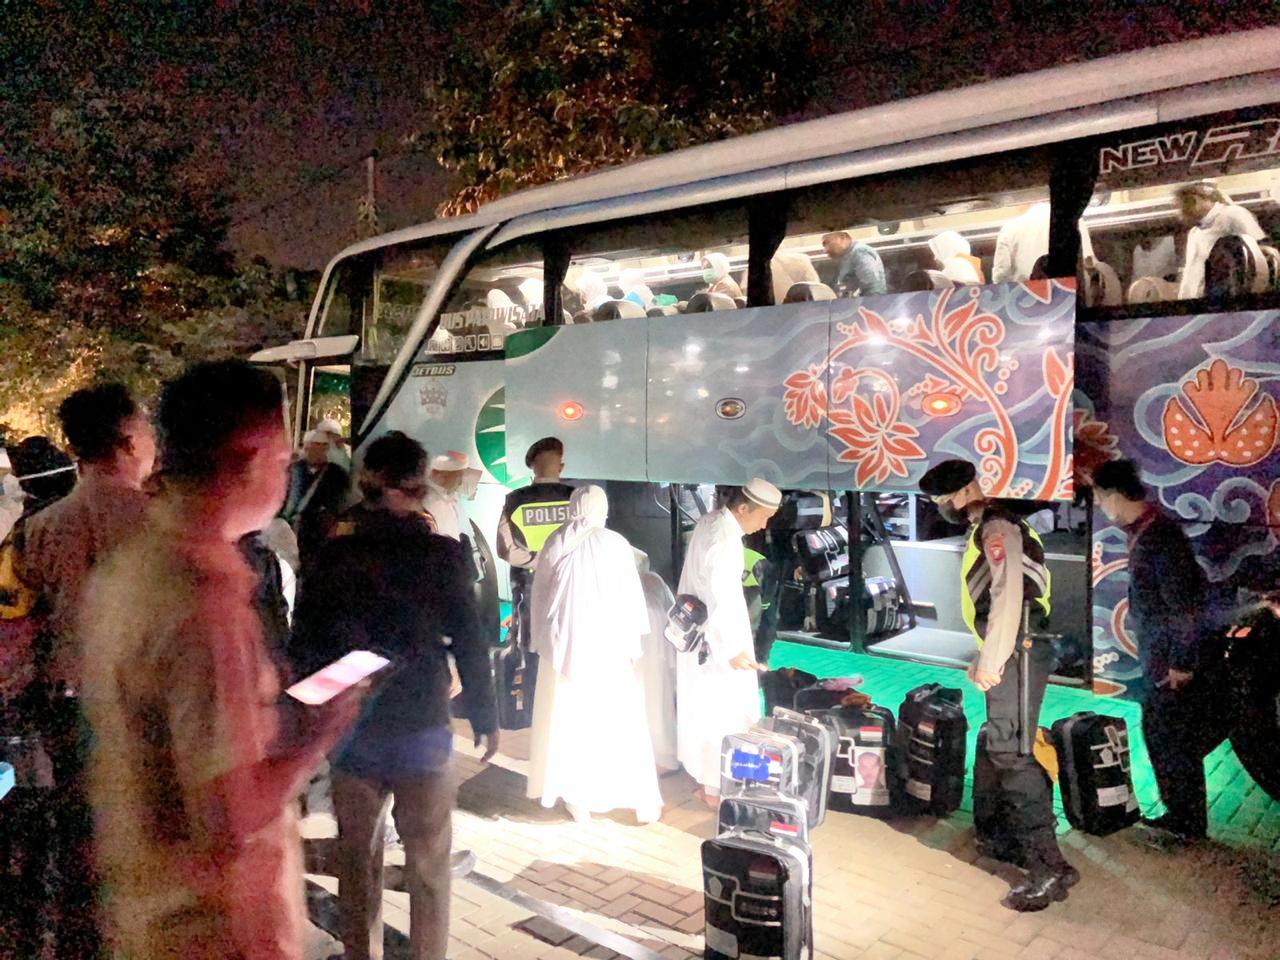 Bupati Purwakarta Kerahkan Ratusan Mobil Dinas untuk Jemput Jemaah Haji